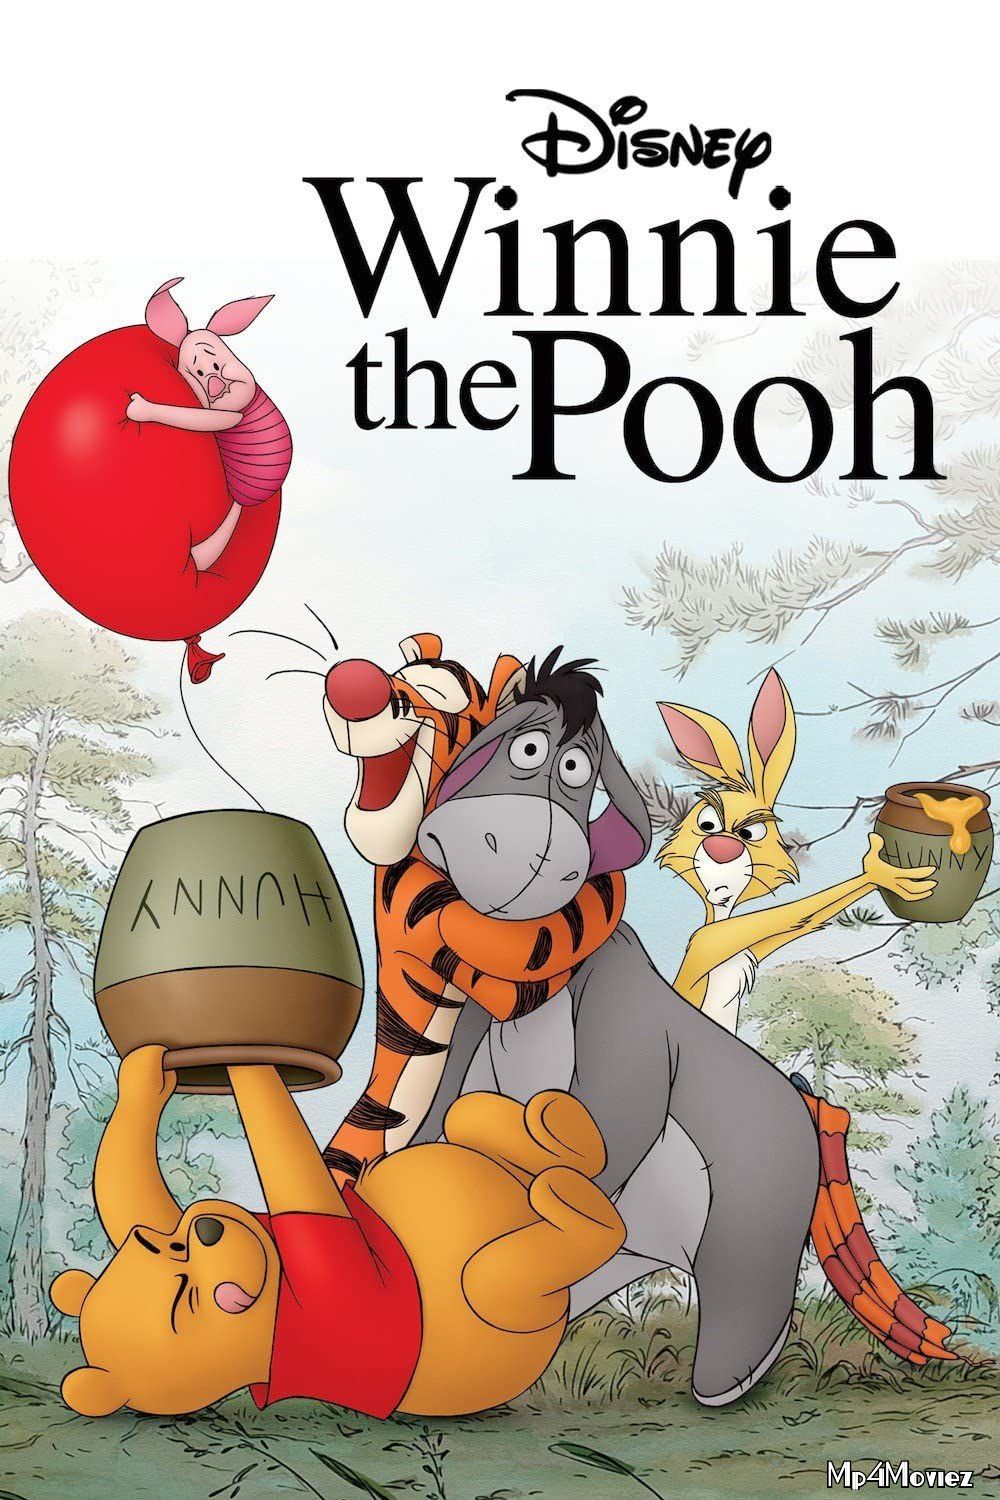 Winnie the Pooh 2011 Hindi Dubbed Full Movie download full movie